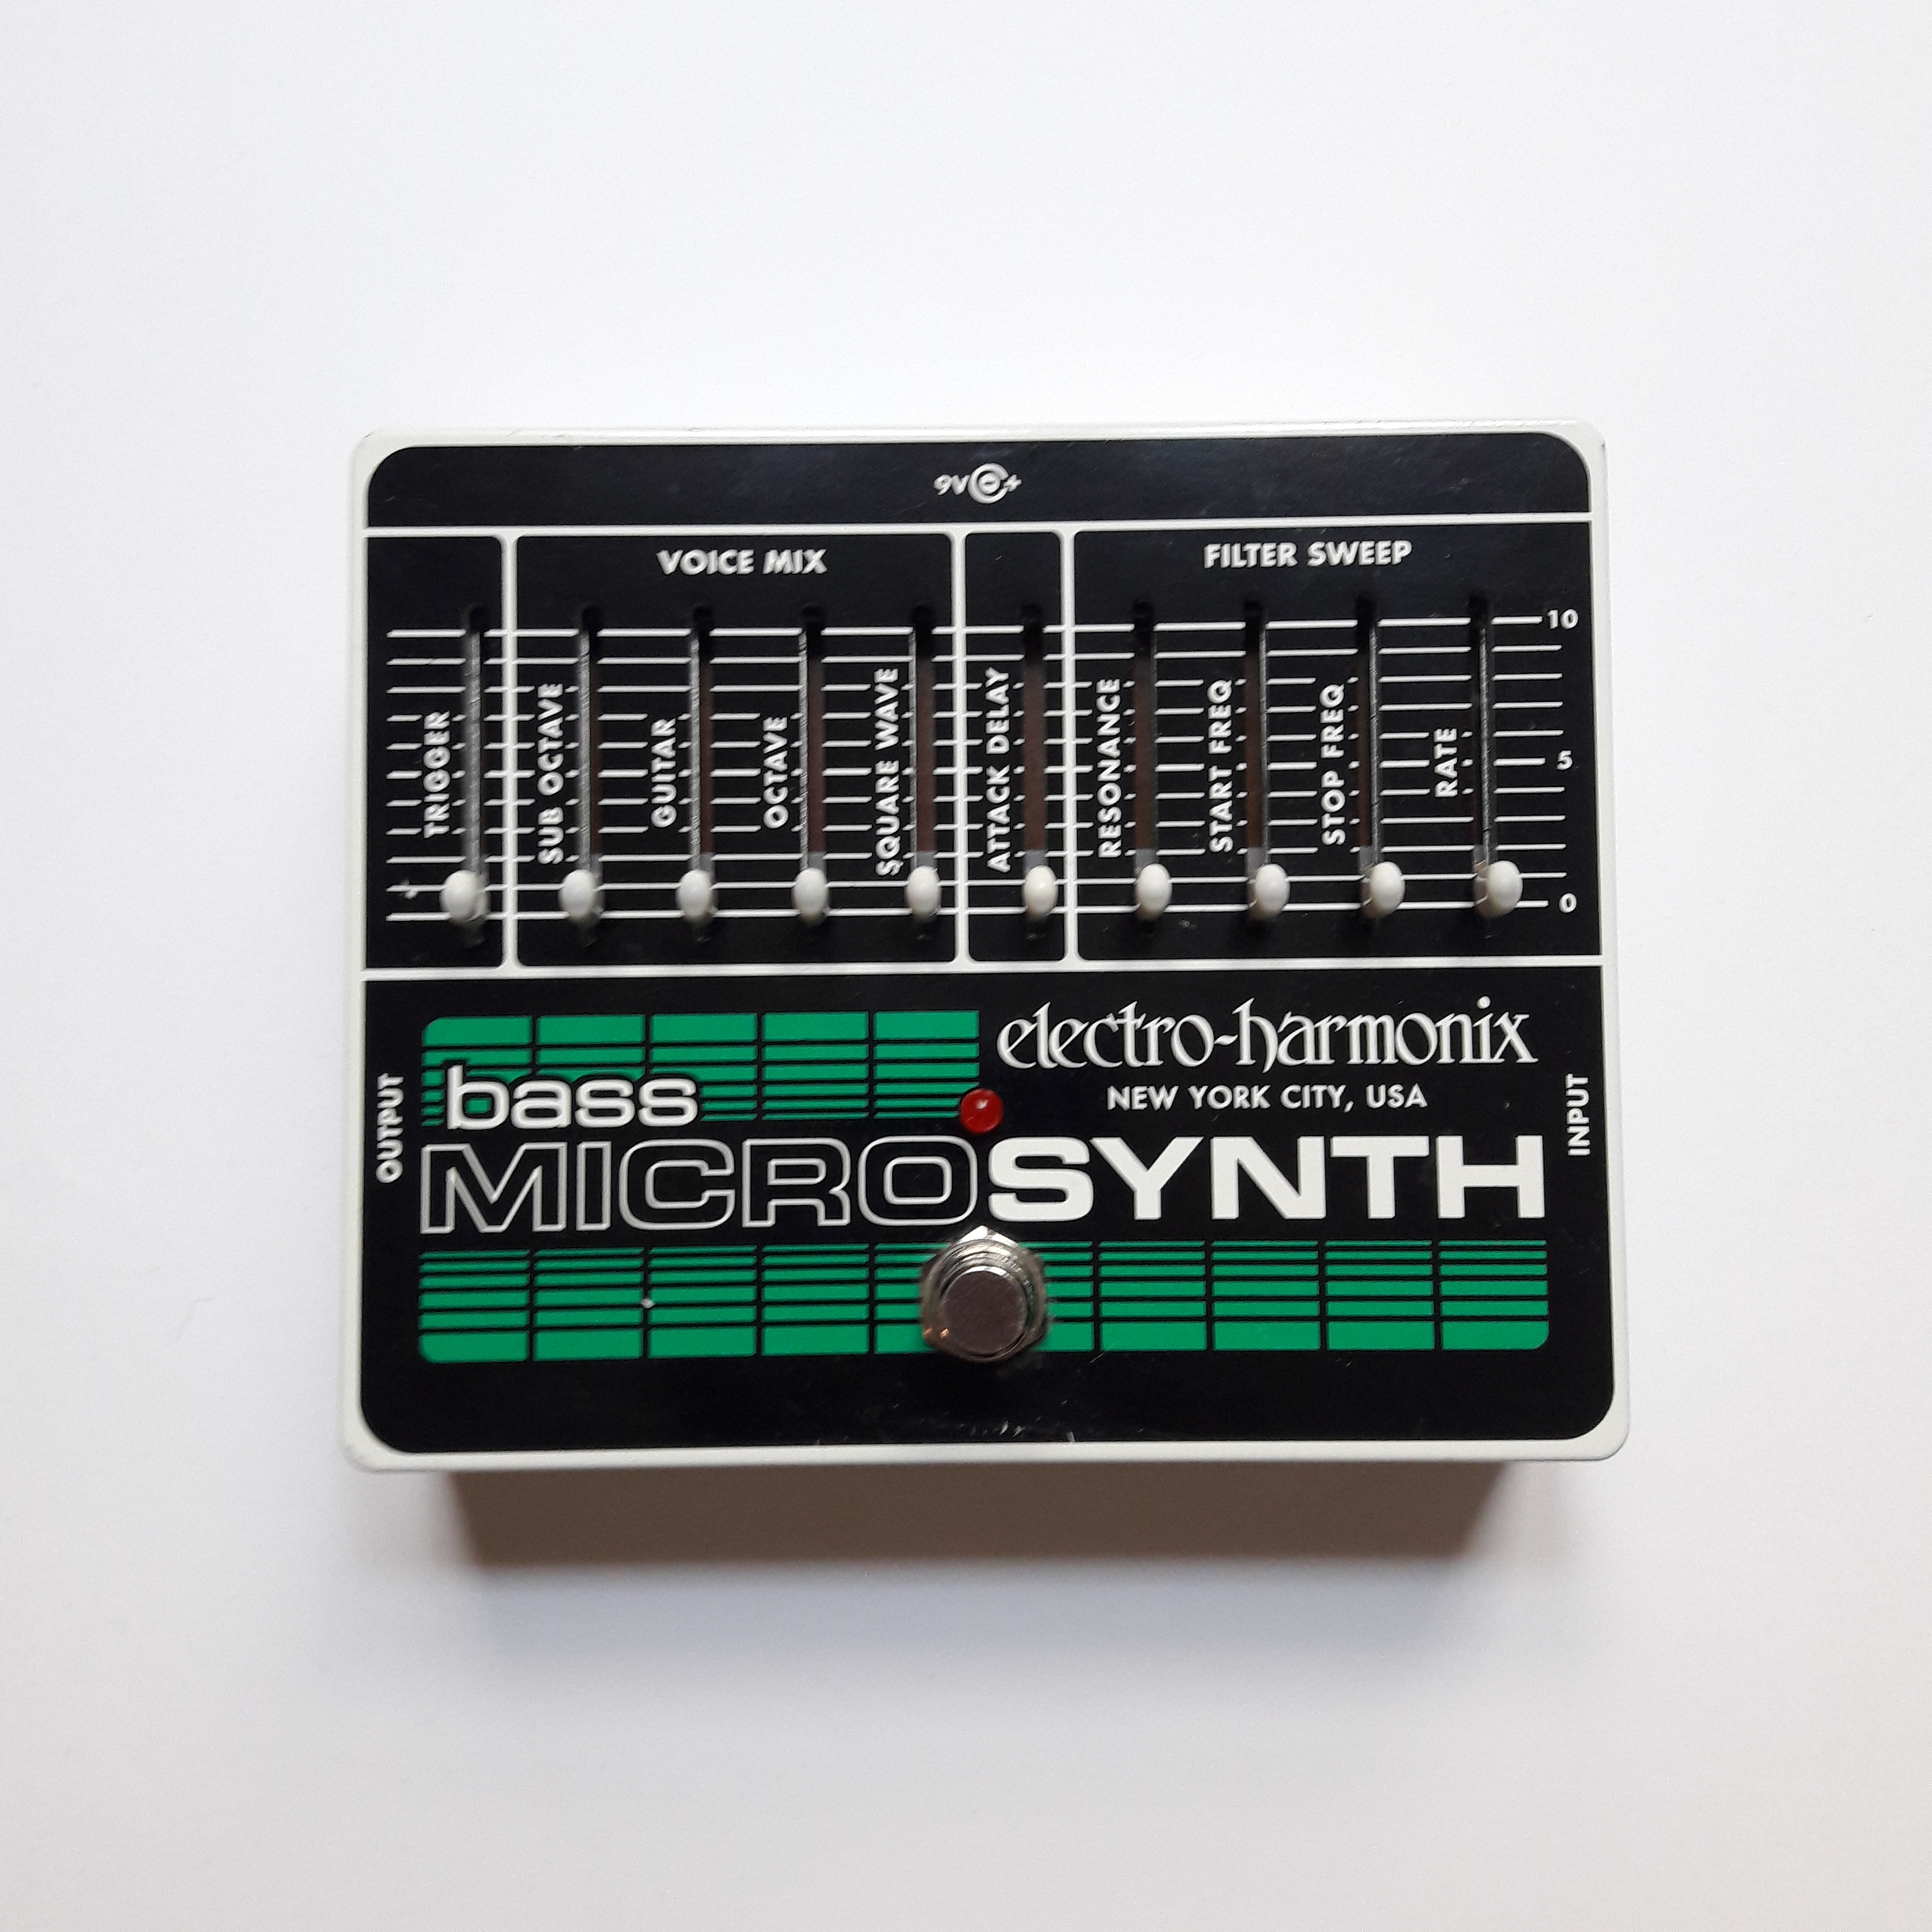 ehx microsynth bass